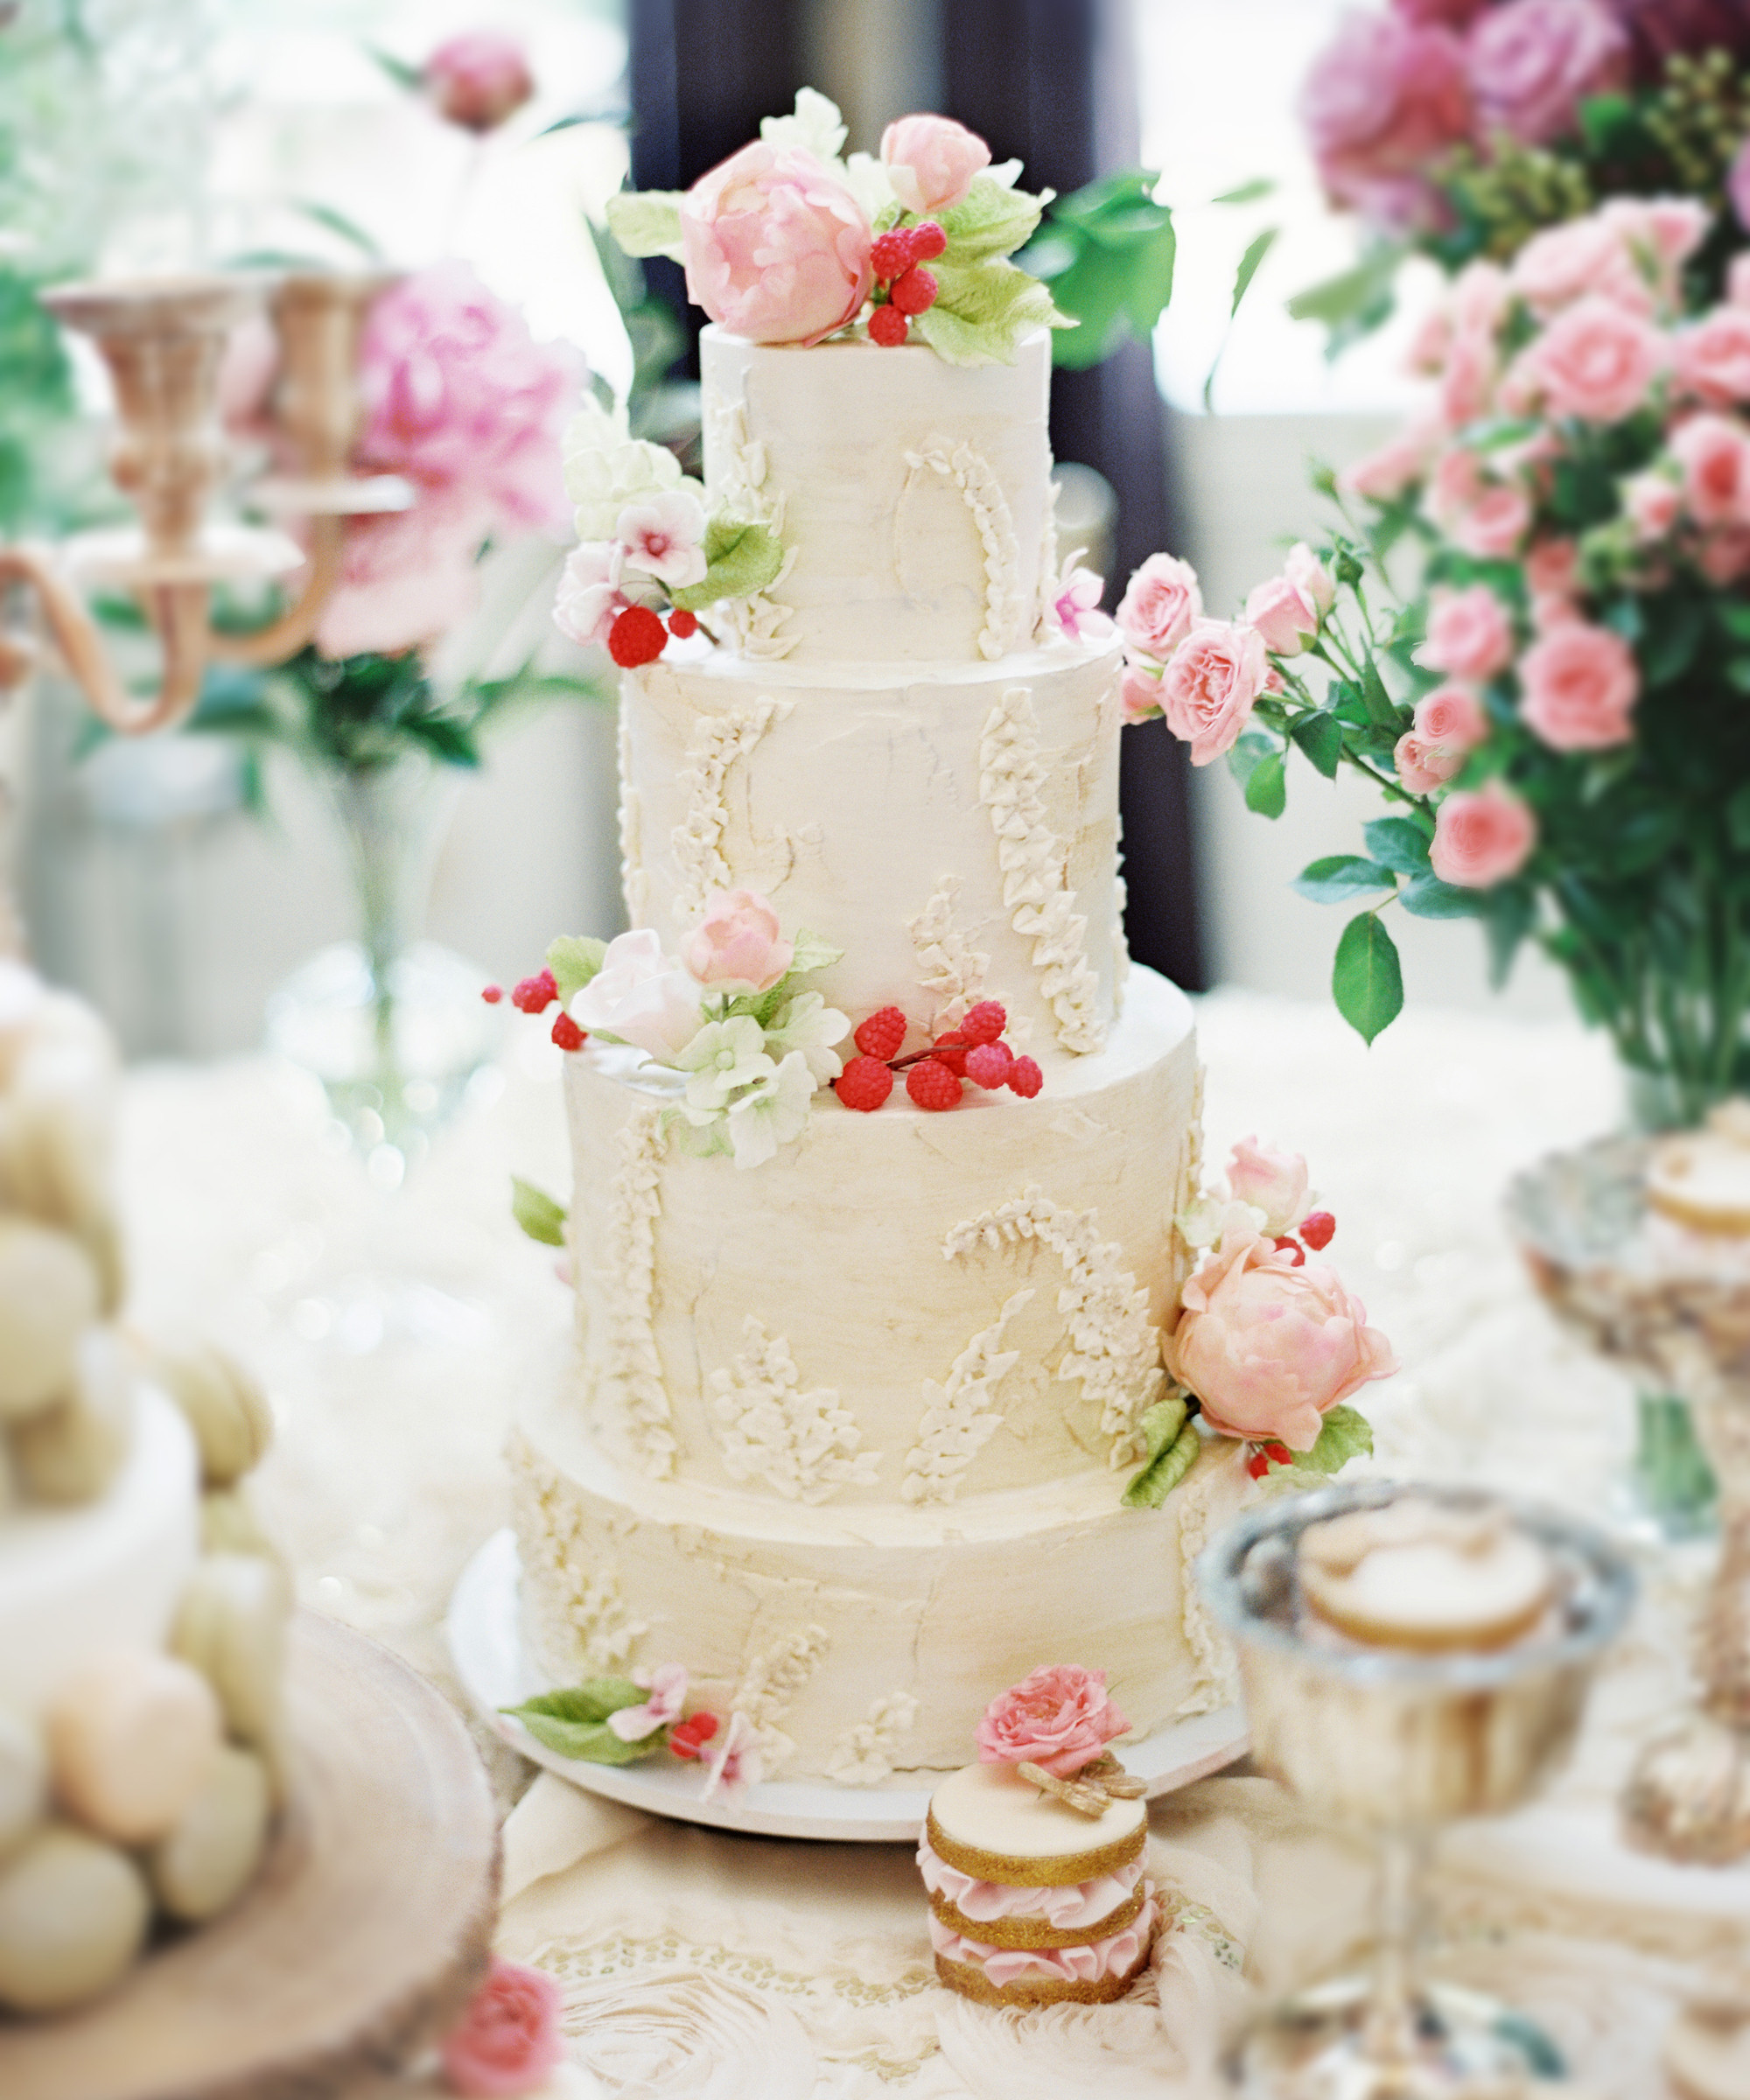 Photos Wedding Cakes
 Vegan and Gluten Free Wedding Cake Ideas Alternative